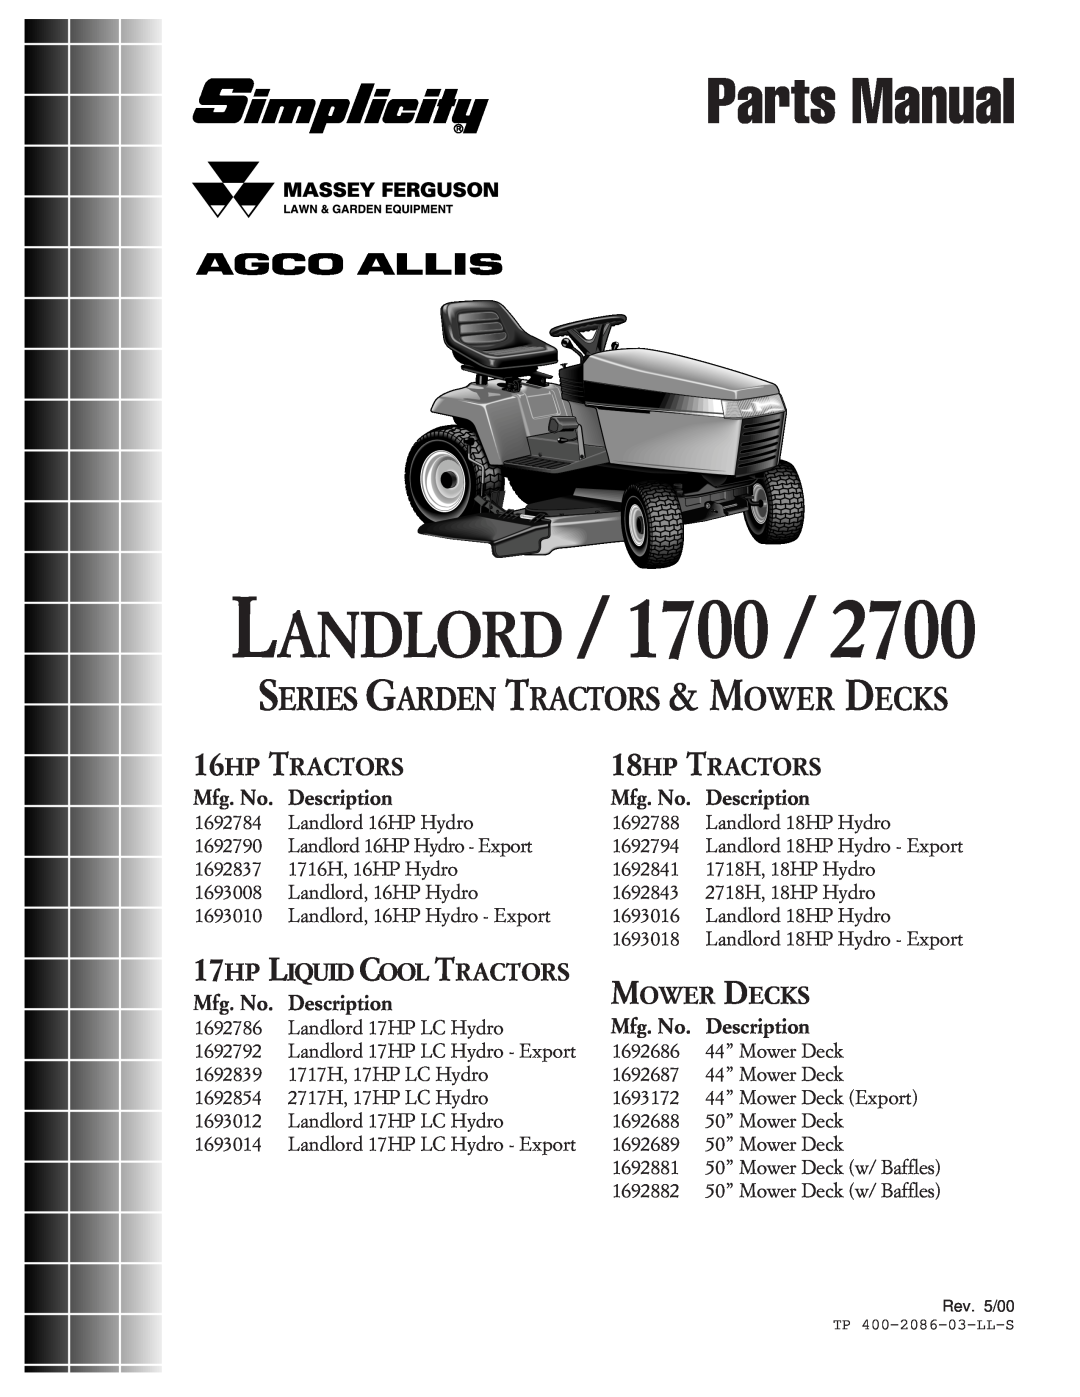 Simplicity 1700, 2700 manual Landlord, Parts Manual, Series Garden Tractors & Mower Decks, 16HP TRACTORS, 18HP TRACTORS 